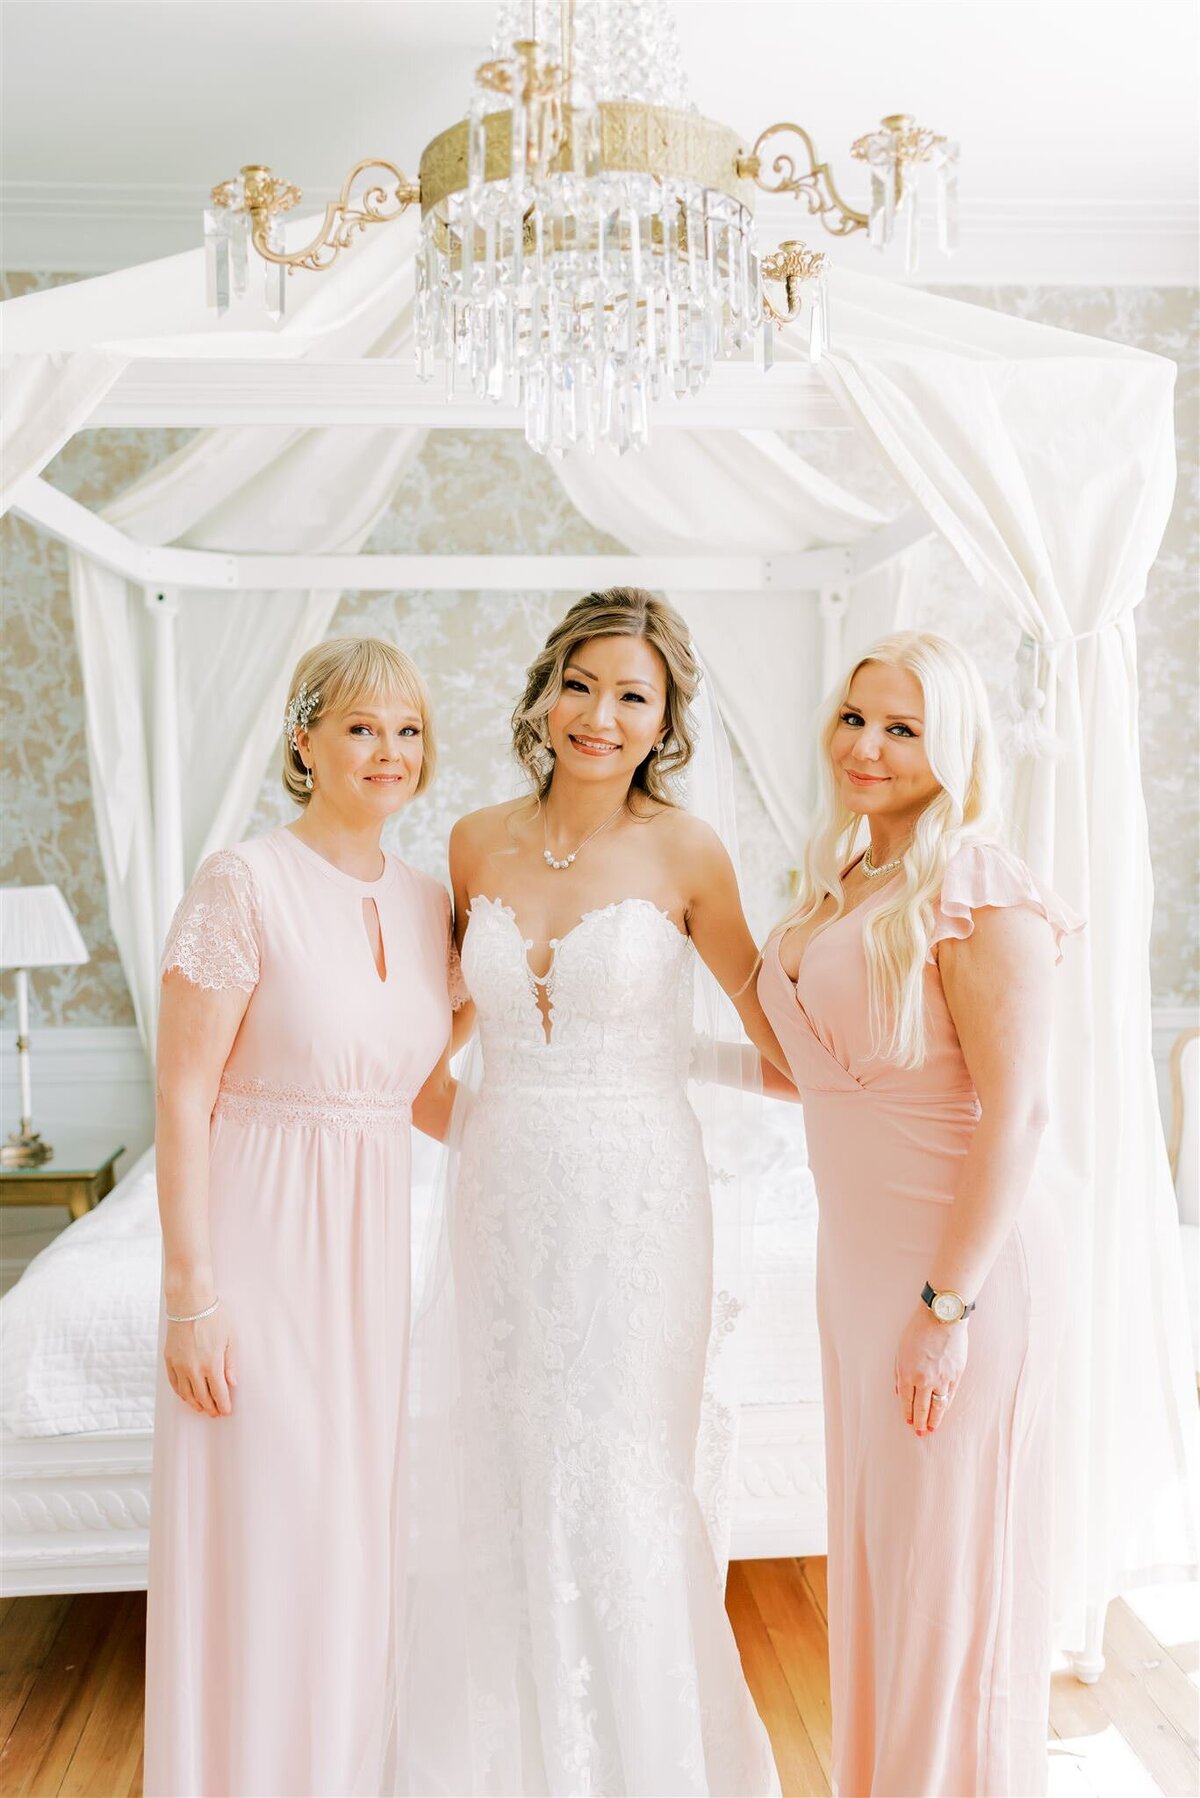 Wedding Photographer Anna Lundgren - helloalora_Rånäs Slott chateau wedding in Sweden bride and bridesmaids in pink dresses